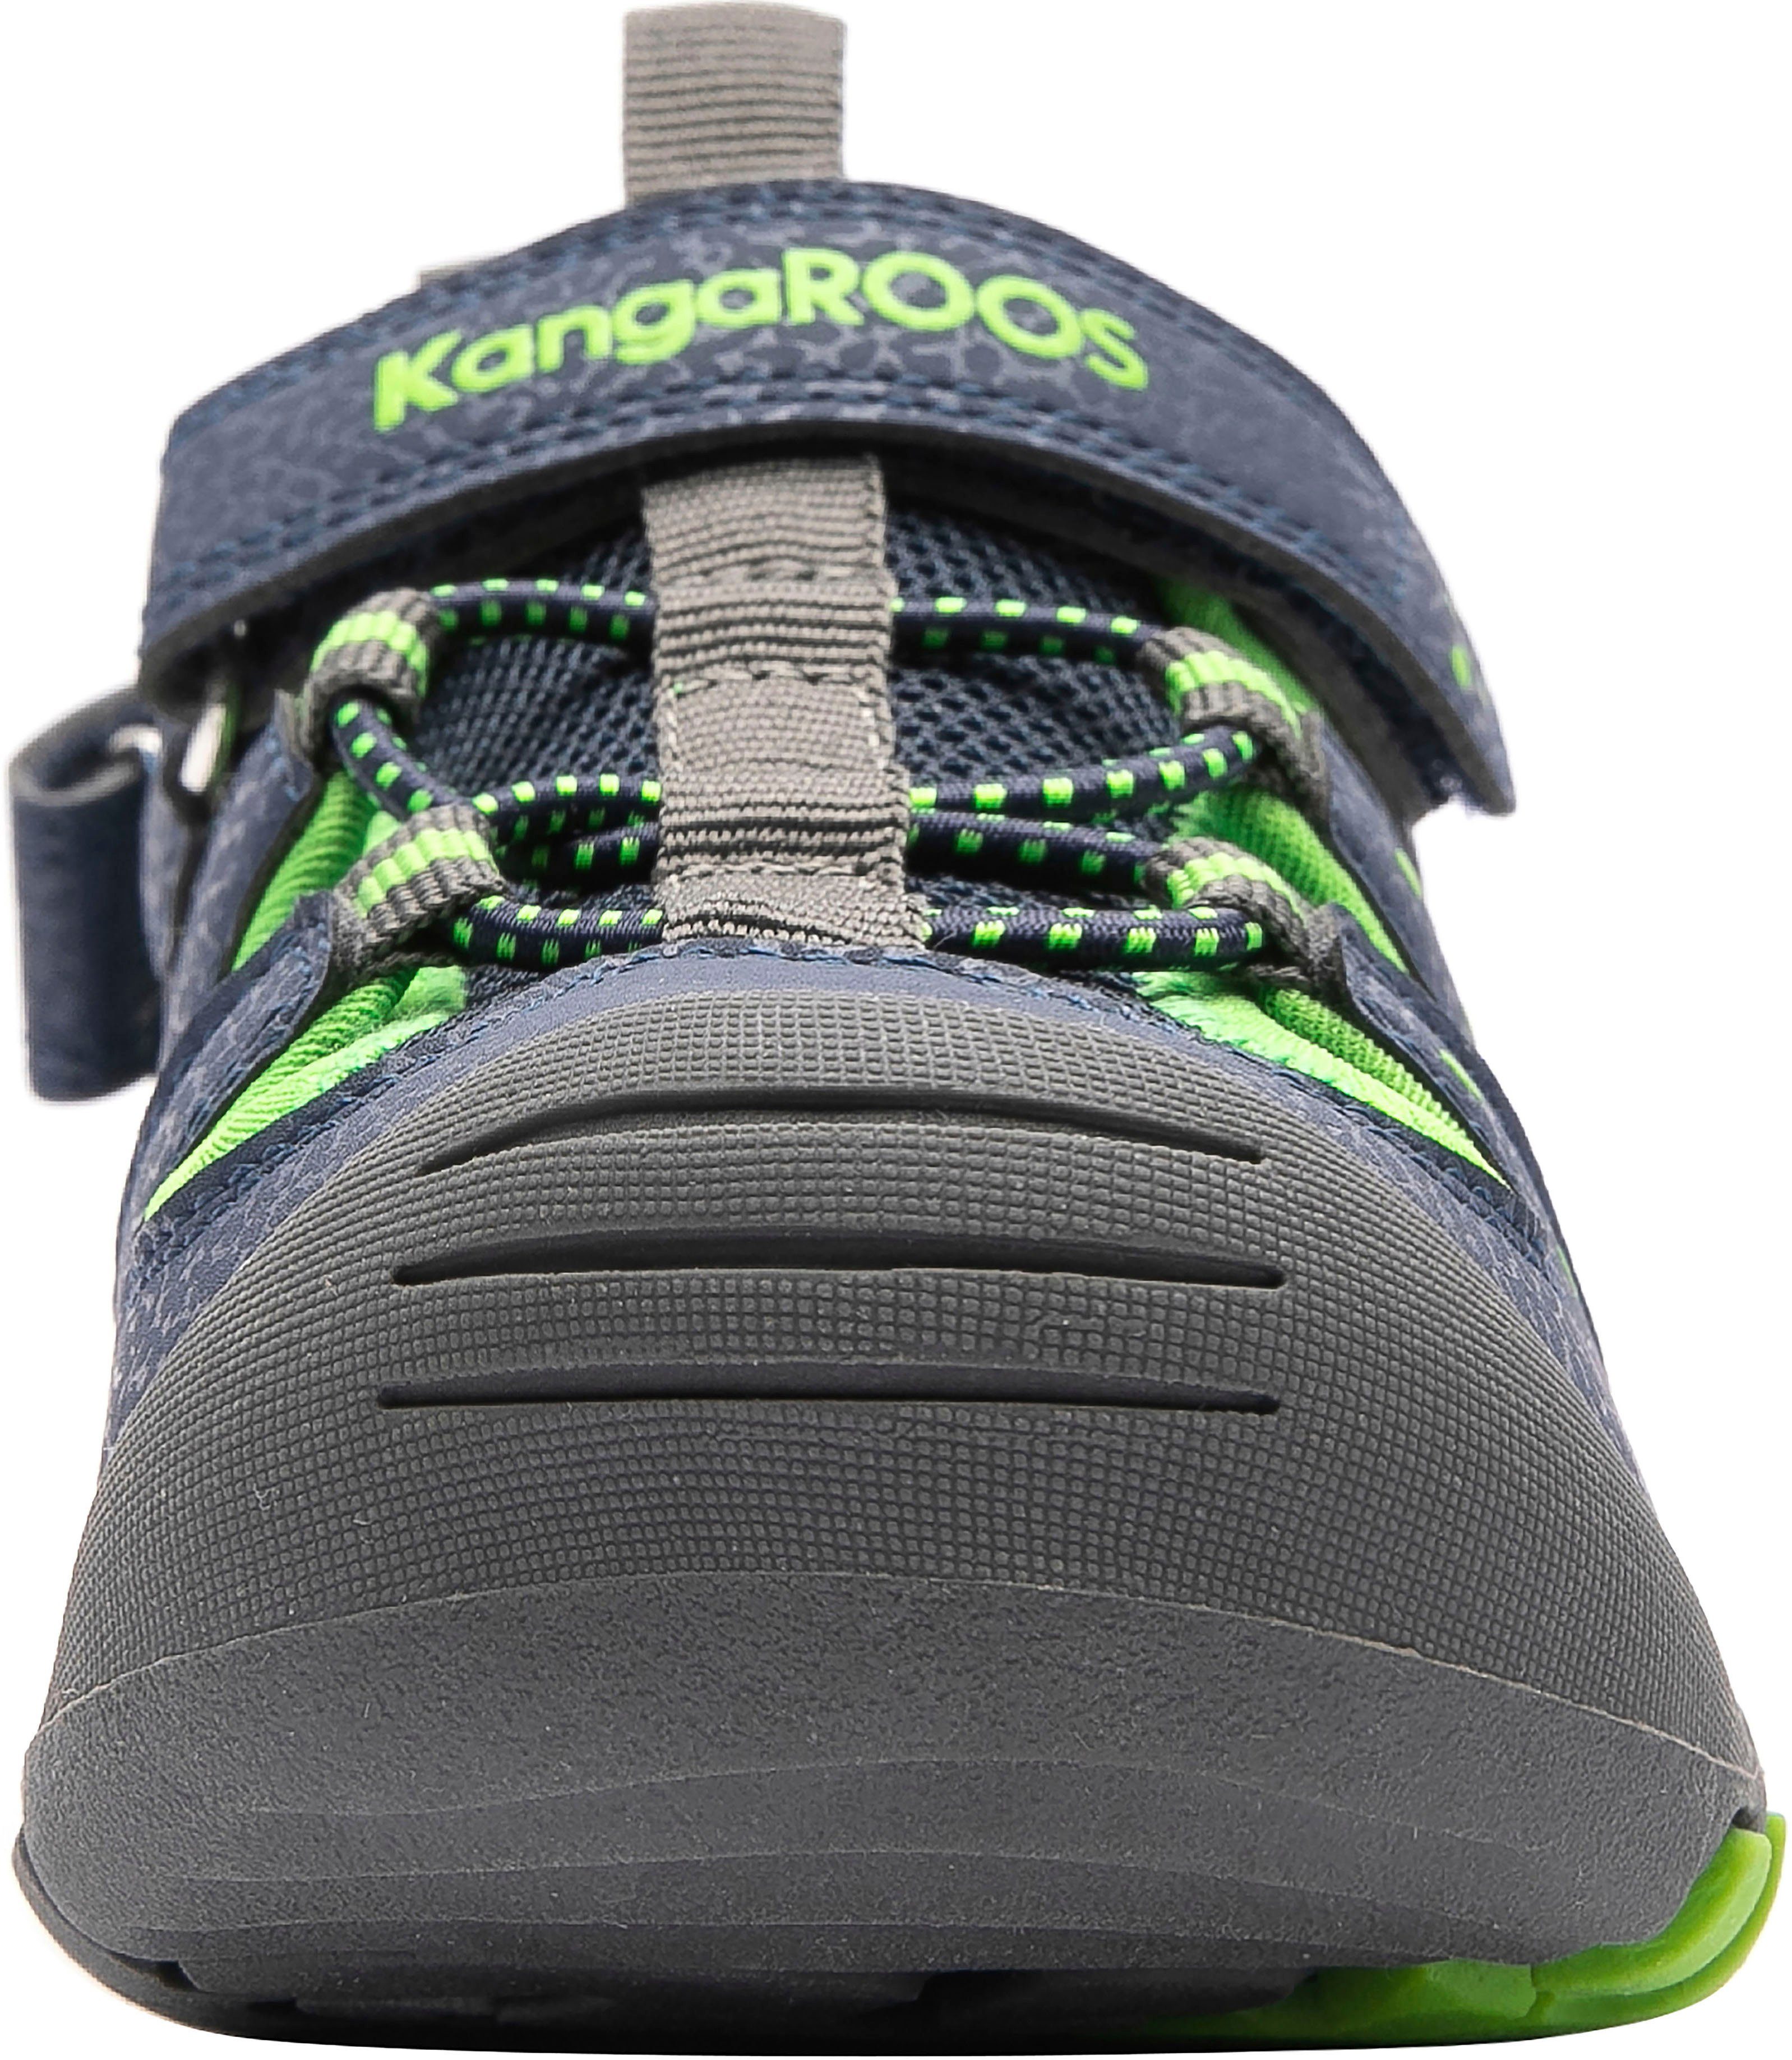 Klettverschluss Sandale KangaROOS mit K-Trek navy-lime